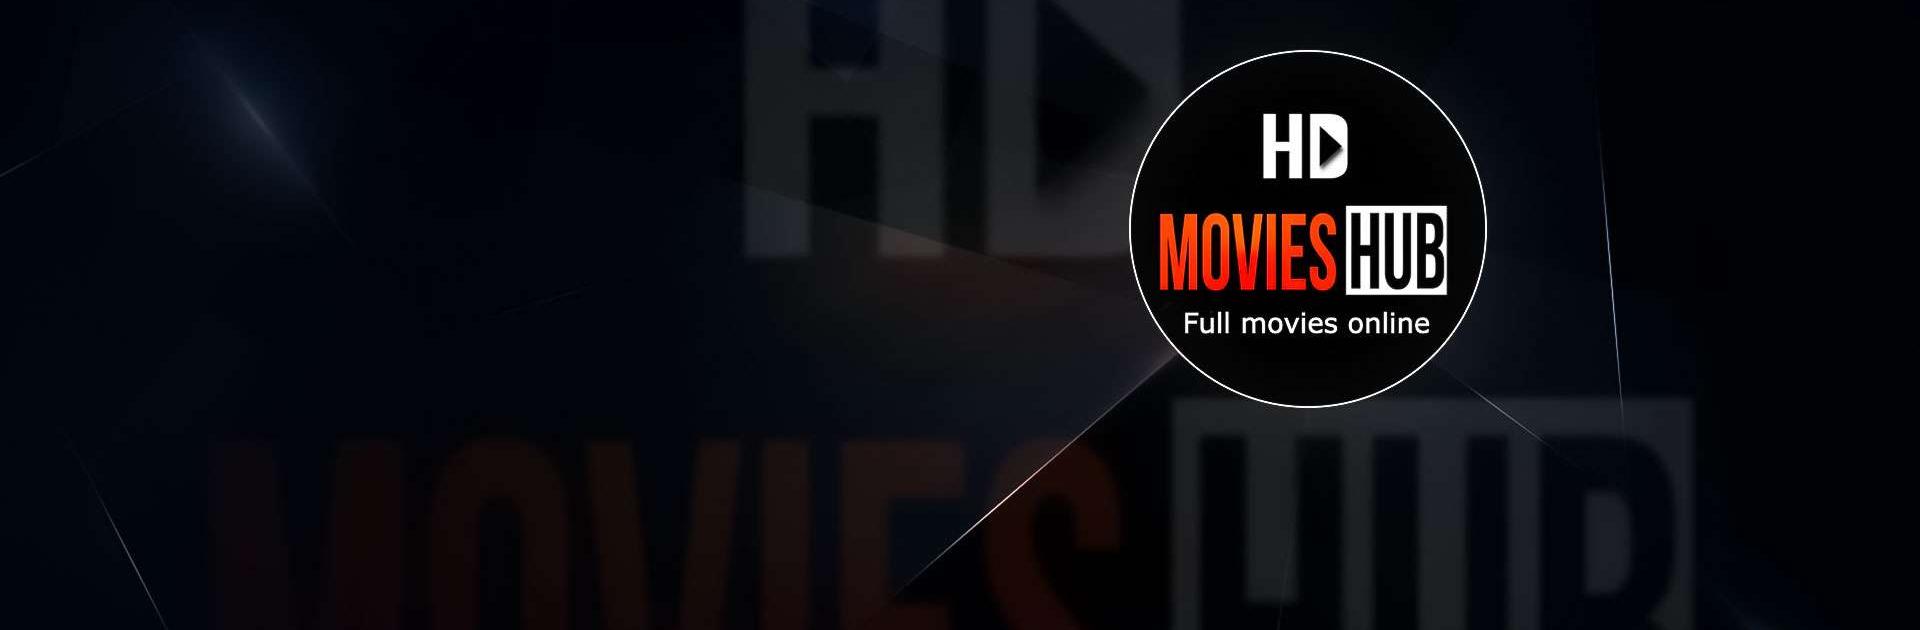 Hd Movies Hub: Movies Online